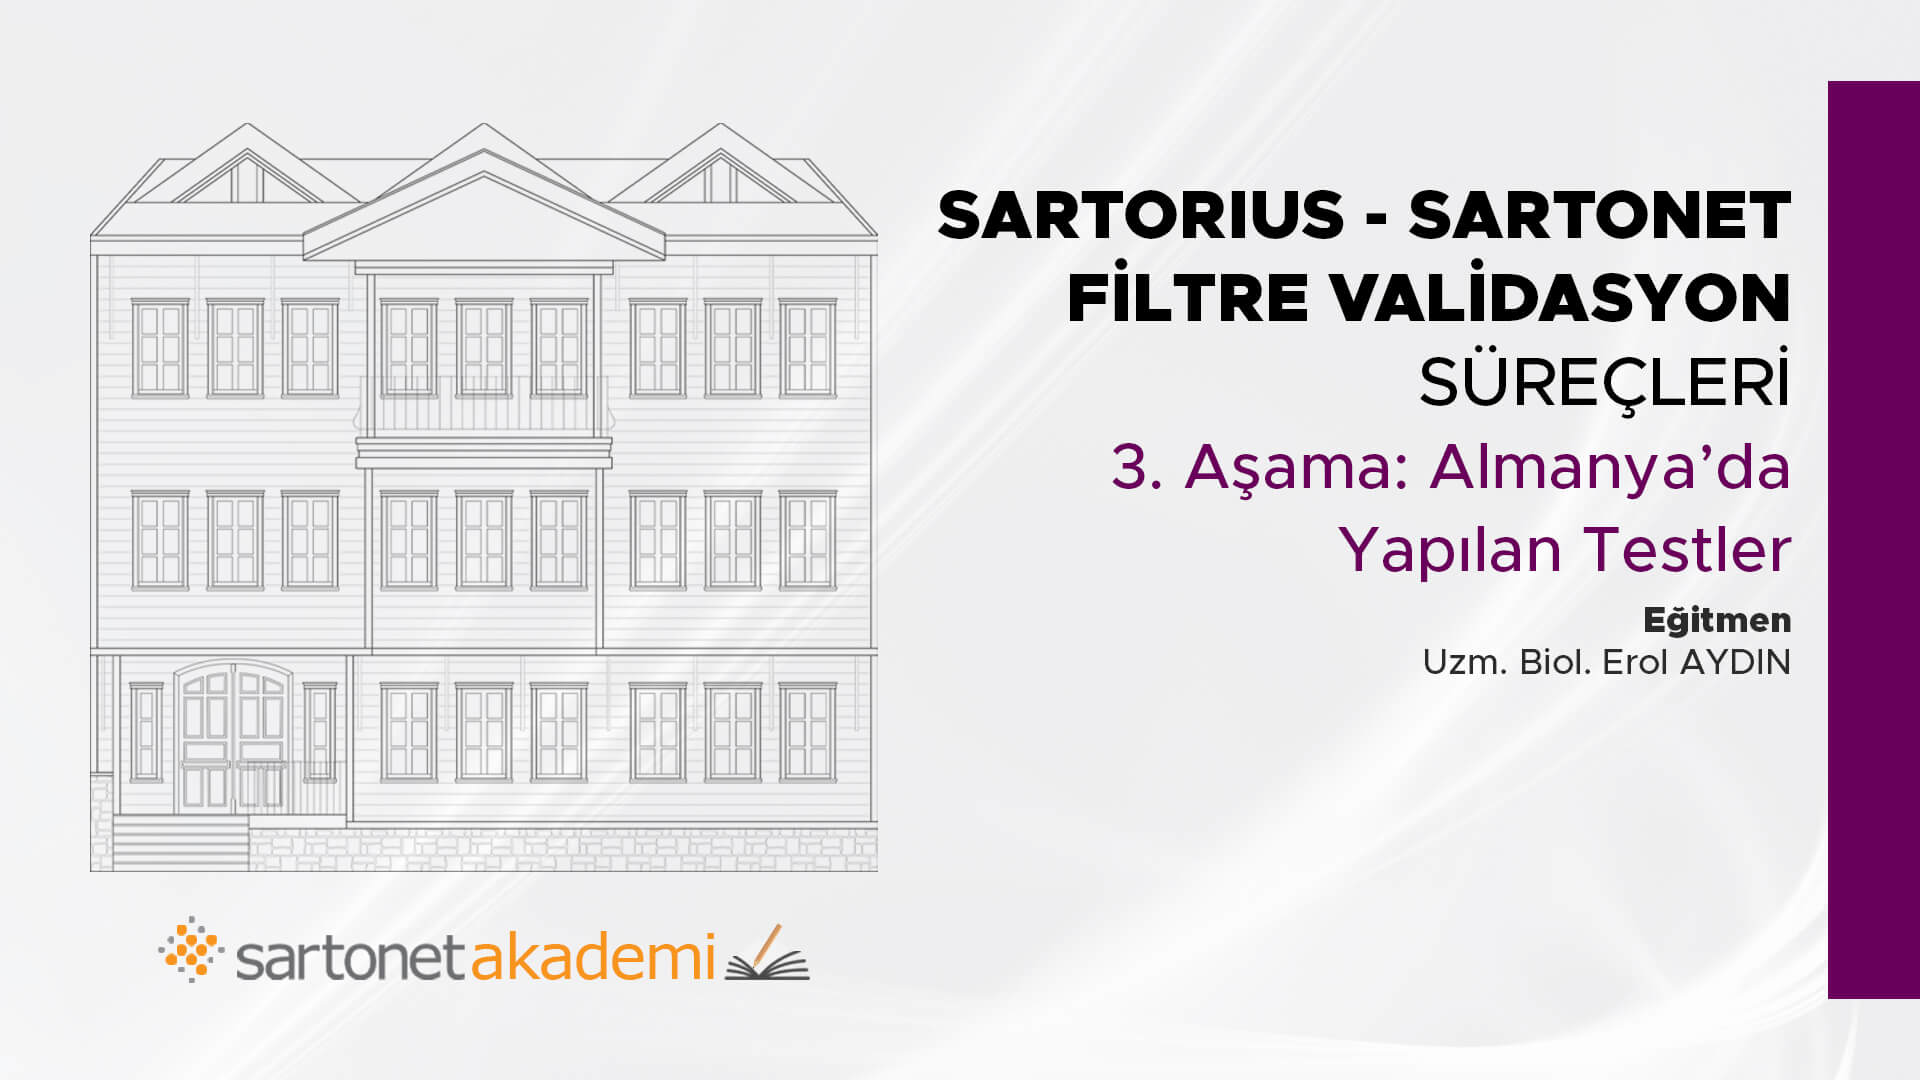 Sartorius-Sartonet Filtre Validasyon Süreçleri  3. Aşama: Almanya’da Yapılan Testler